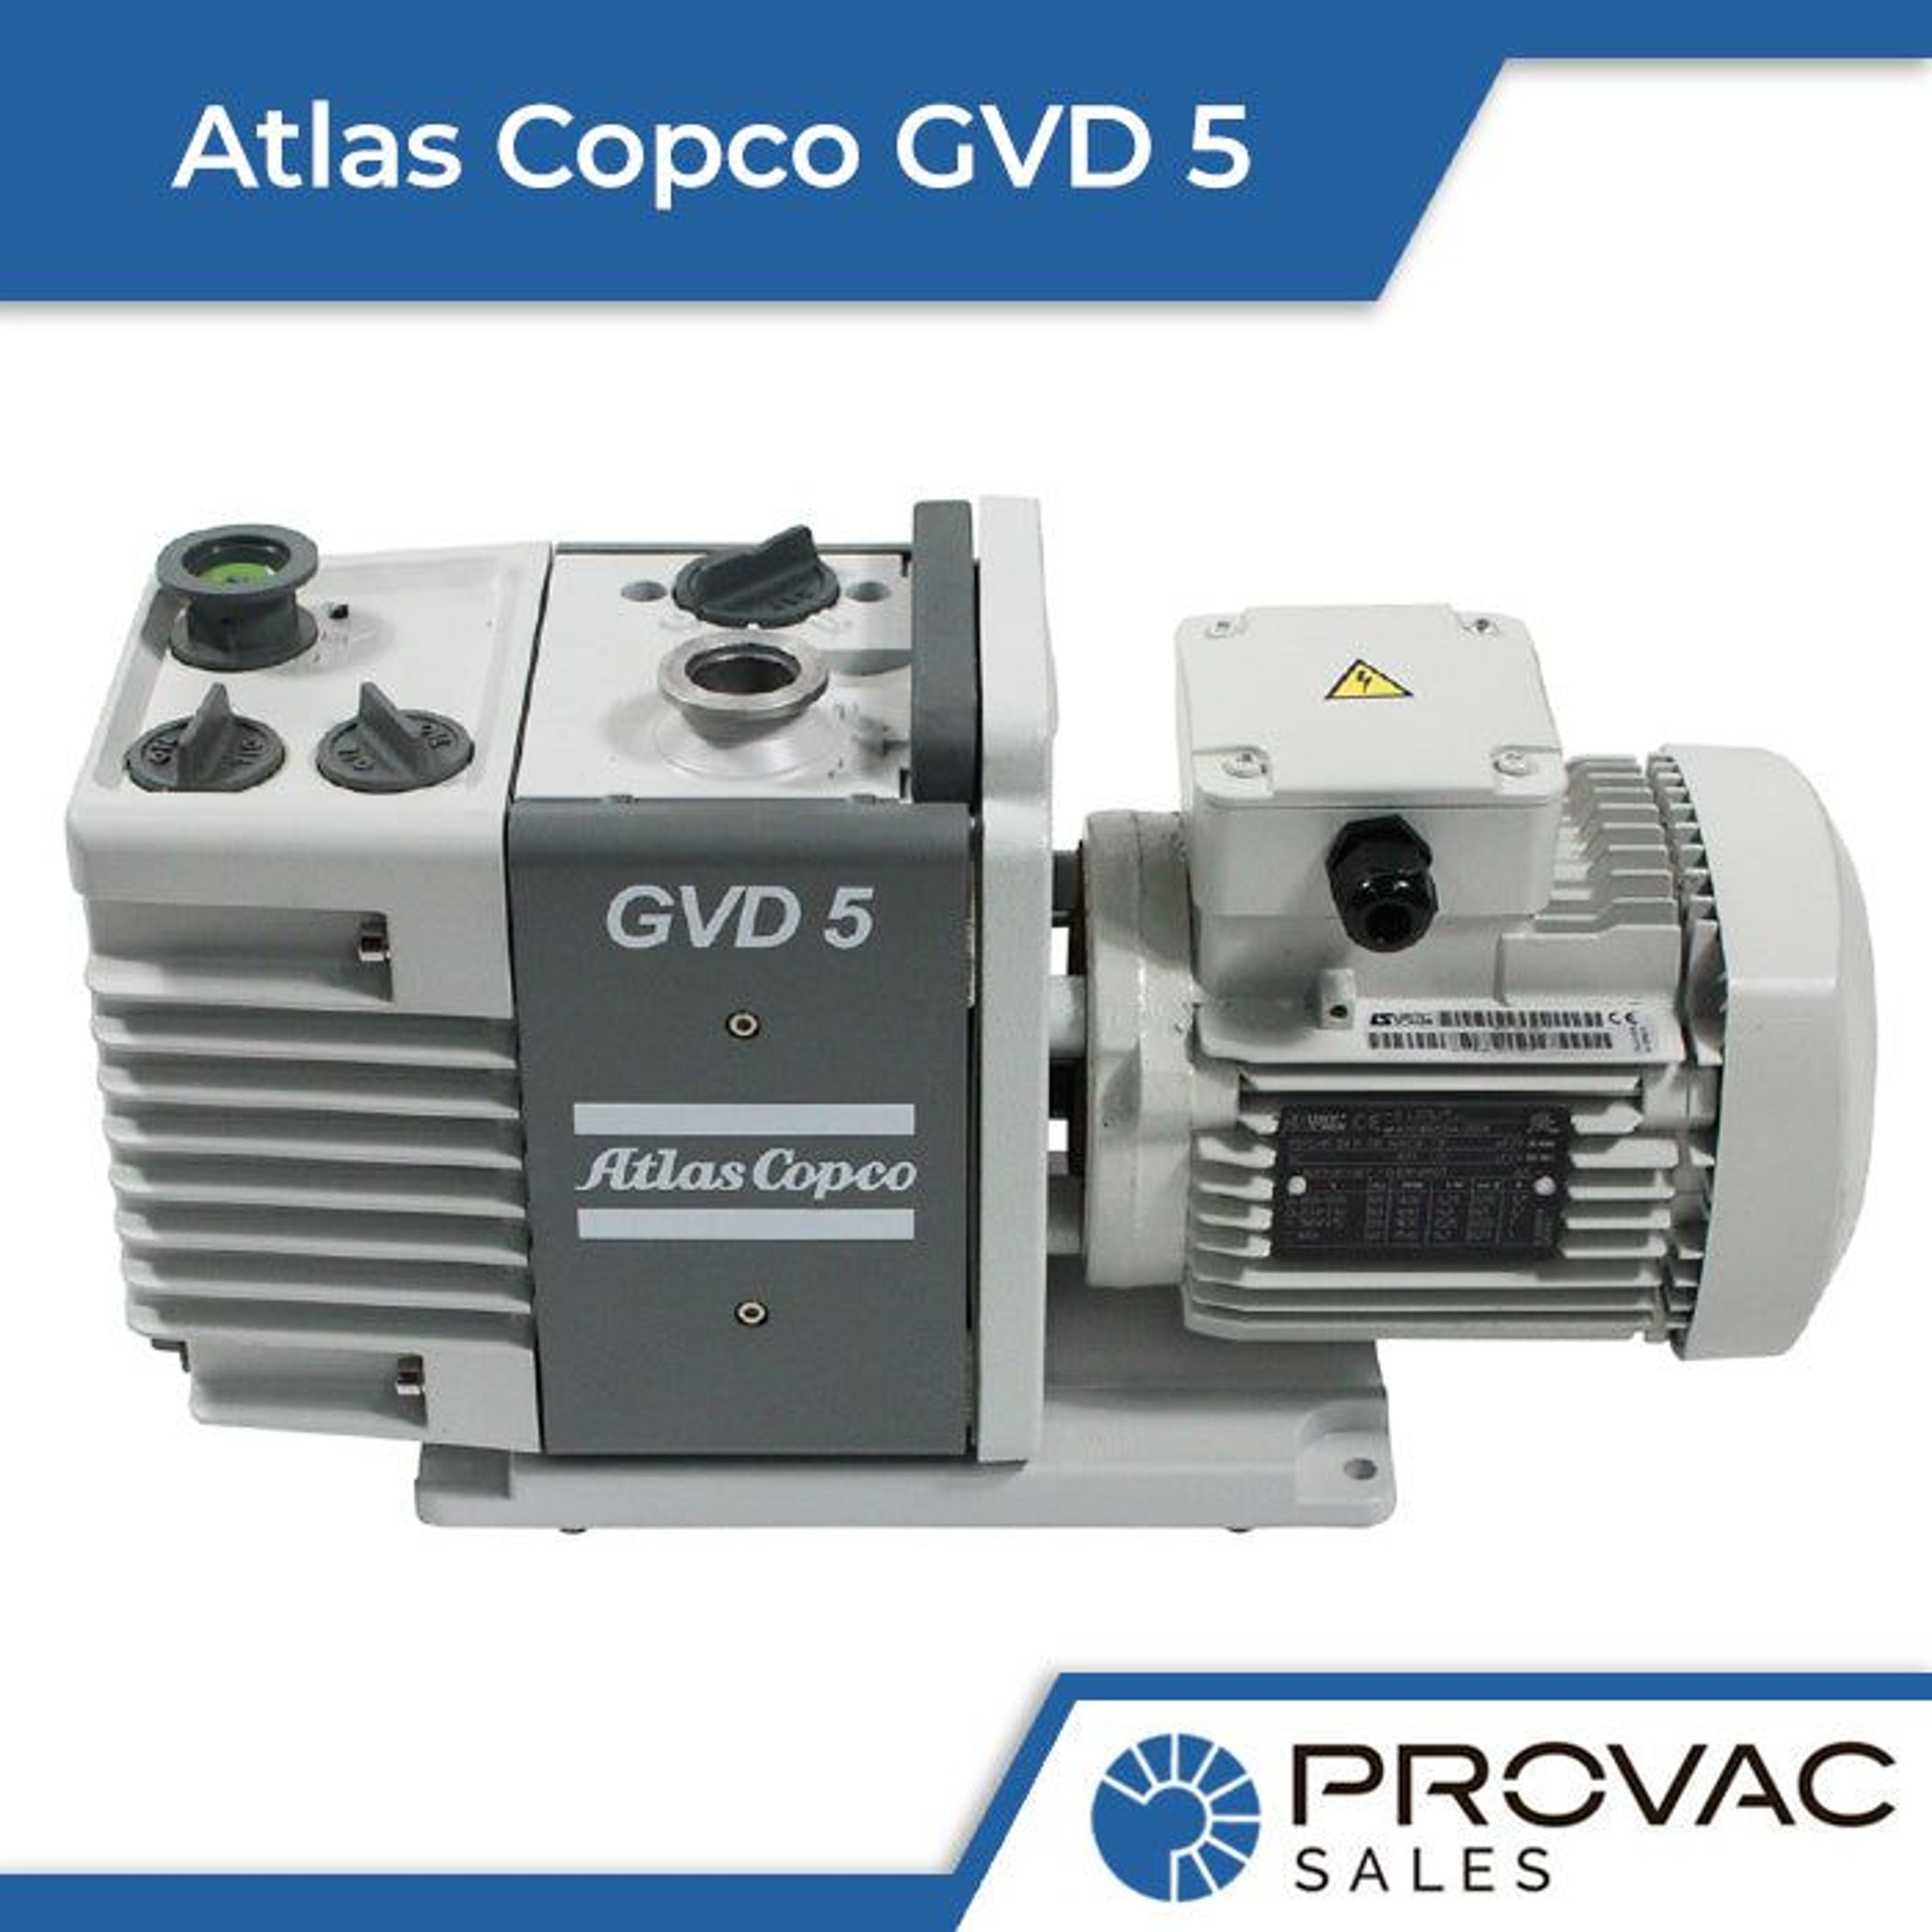 On Sale Now: Atlas Copco GVD 5 Rotary Vane Pump Background